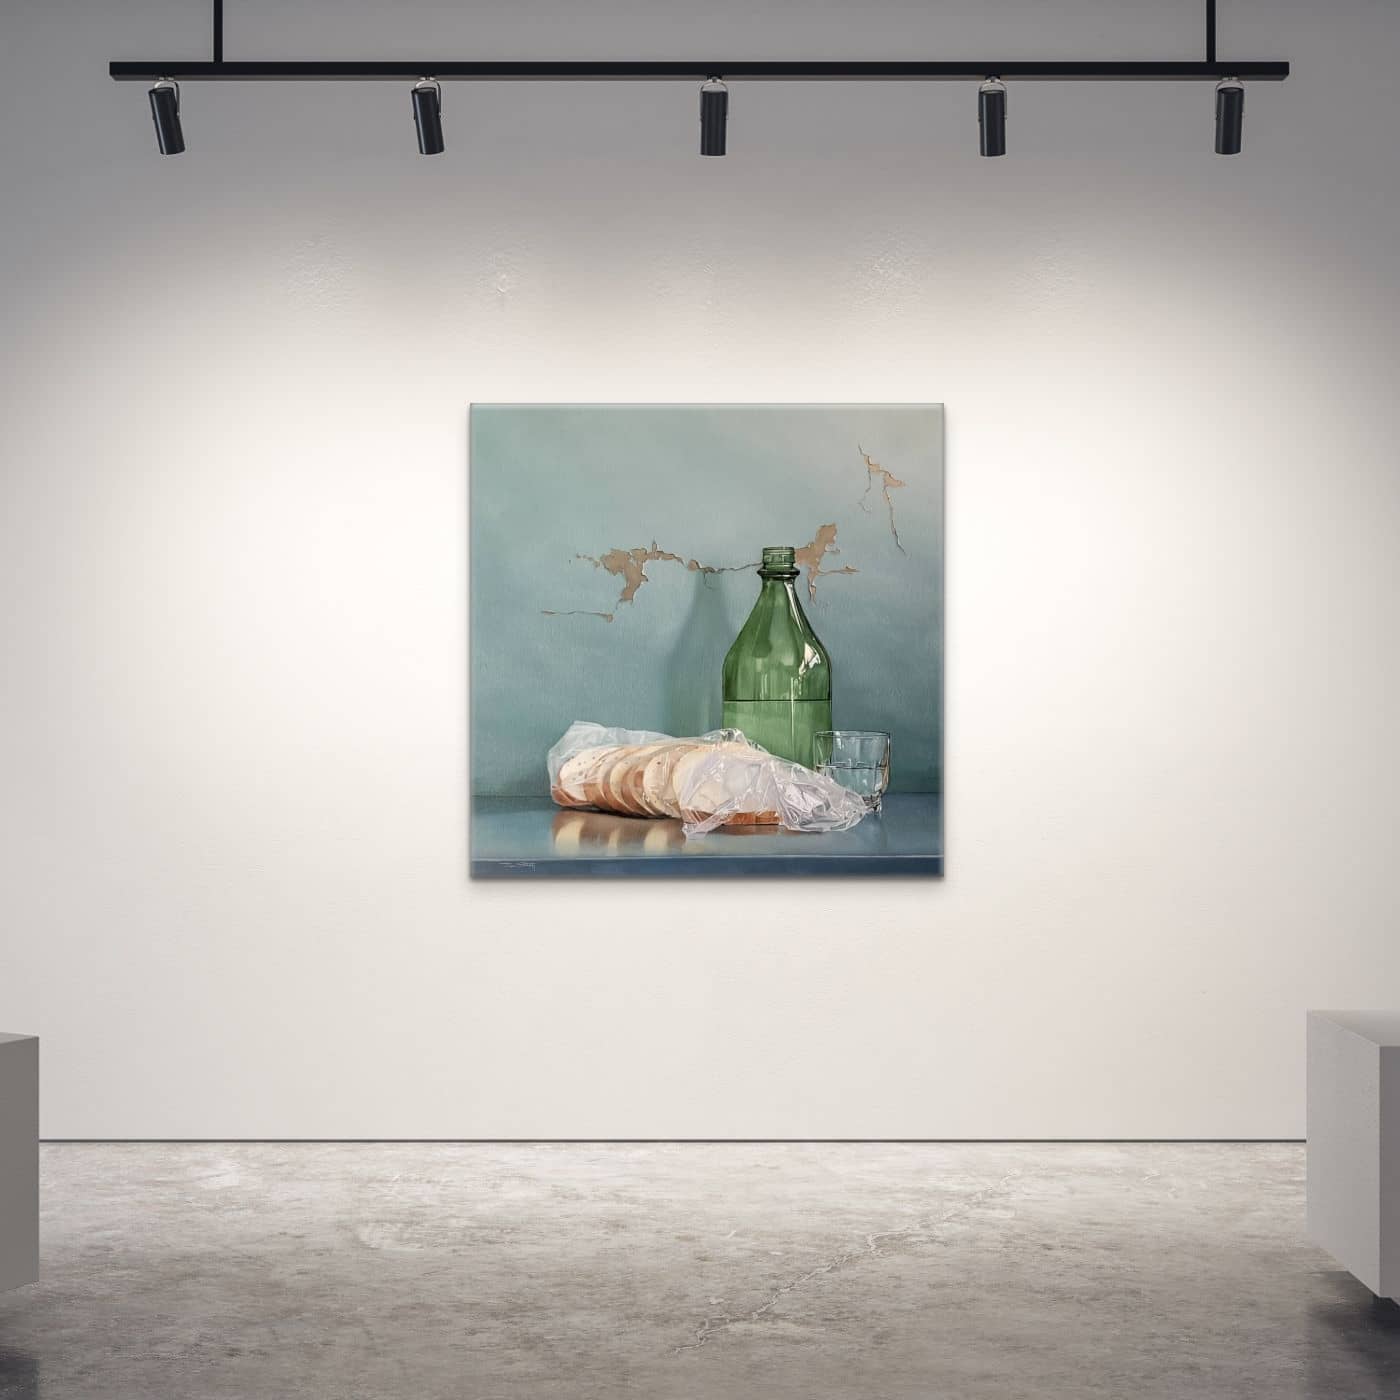 Peninsula-Based Australian Artist Jim Stagg ~ 'Bread and Water' - Curate Art & Design Gallery Sorrento Mornington Peninsula Melbourne